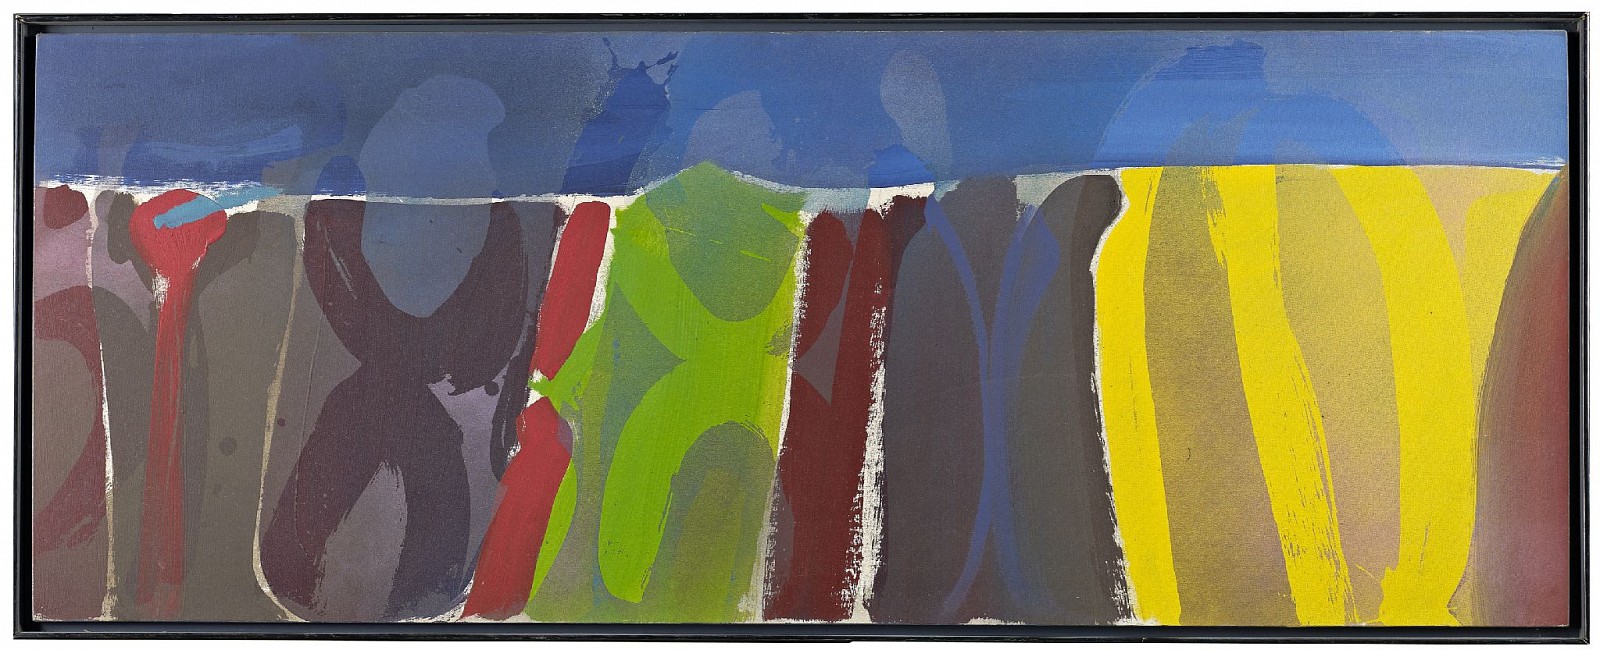 Syd Solomon, Shoresign | SOLD, 1976
Acrylic and aerosol enamel on canvas, 23 x 60 in. (58.4 x 152.4 cm)
© Estate of Syd Solomon
SOL-00039